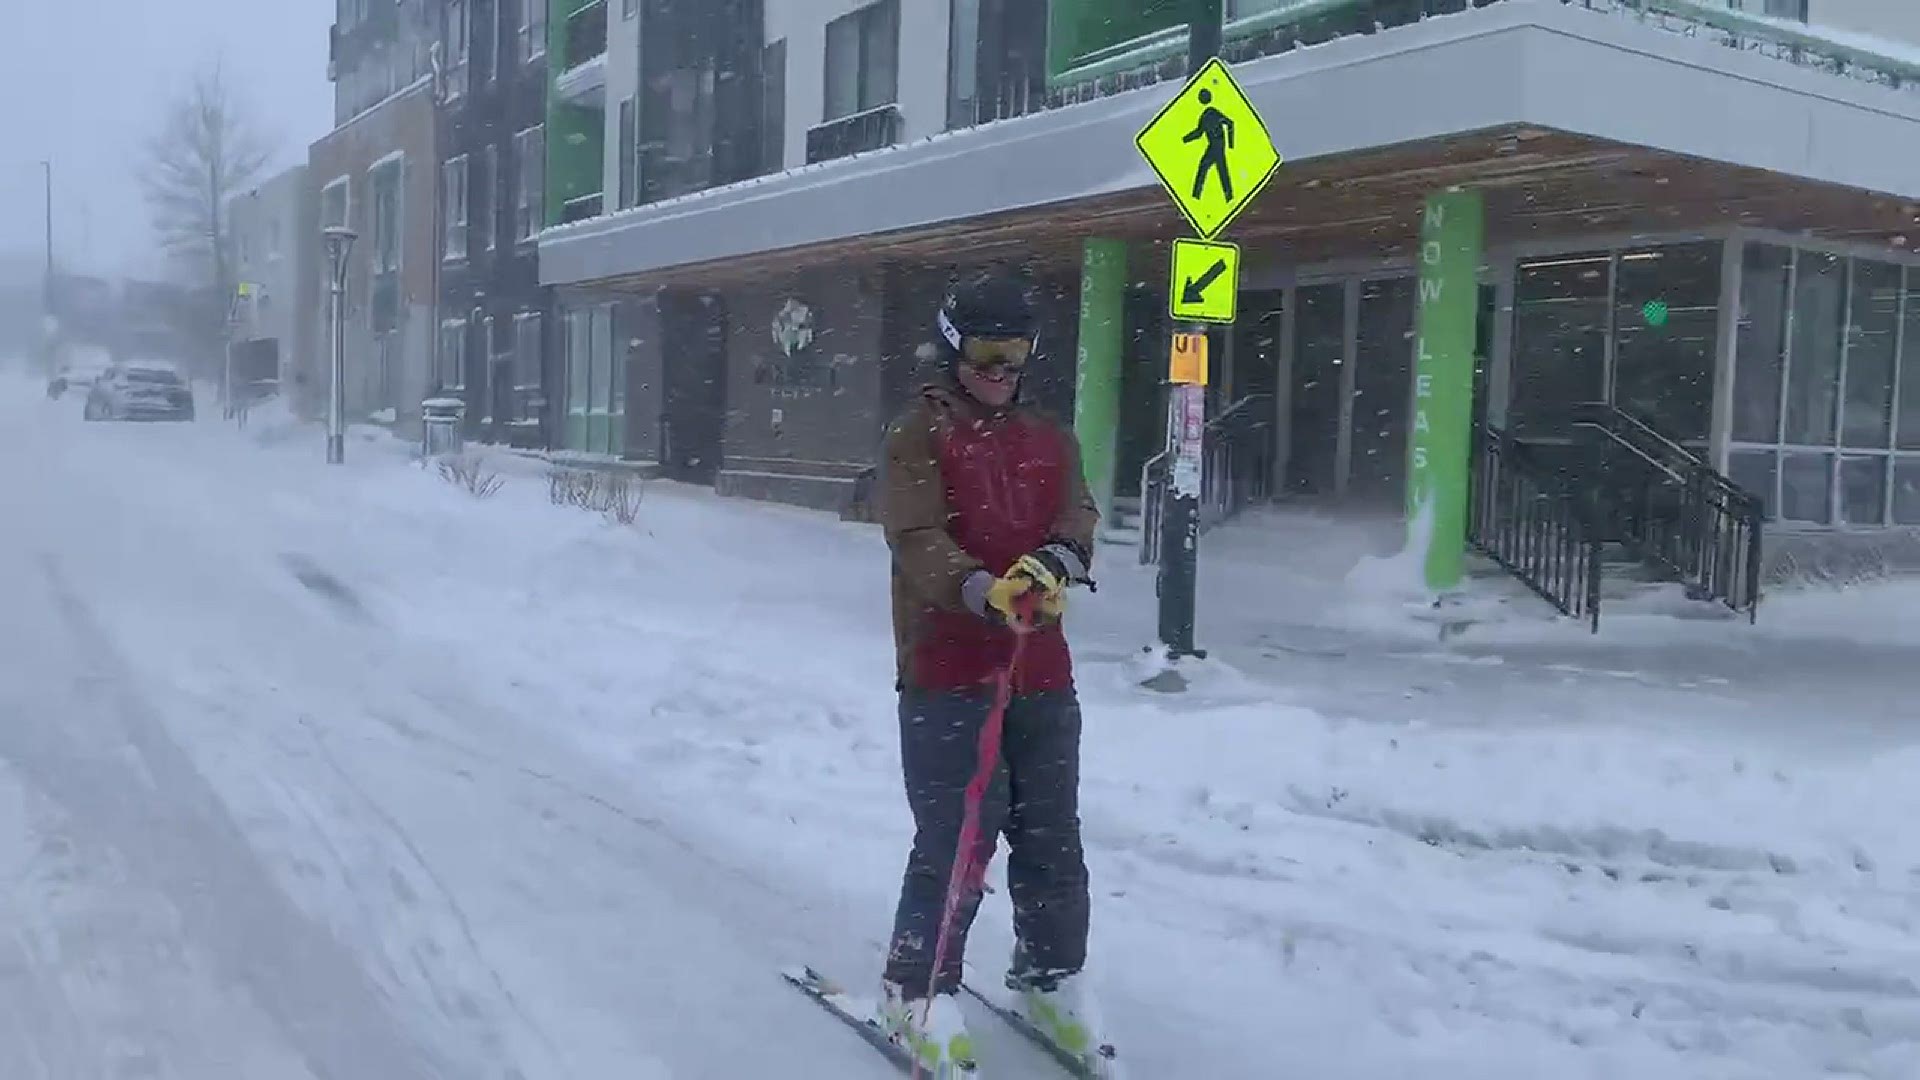 People Skijorning on Tennyson Street in Denver!
Credit: Erin DeSilva